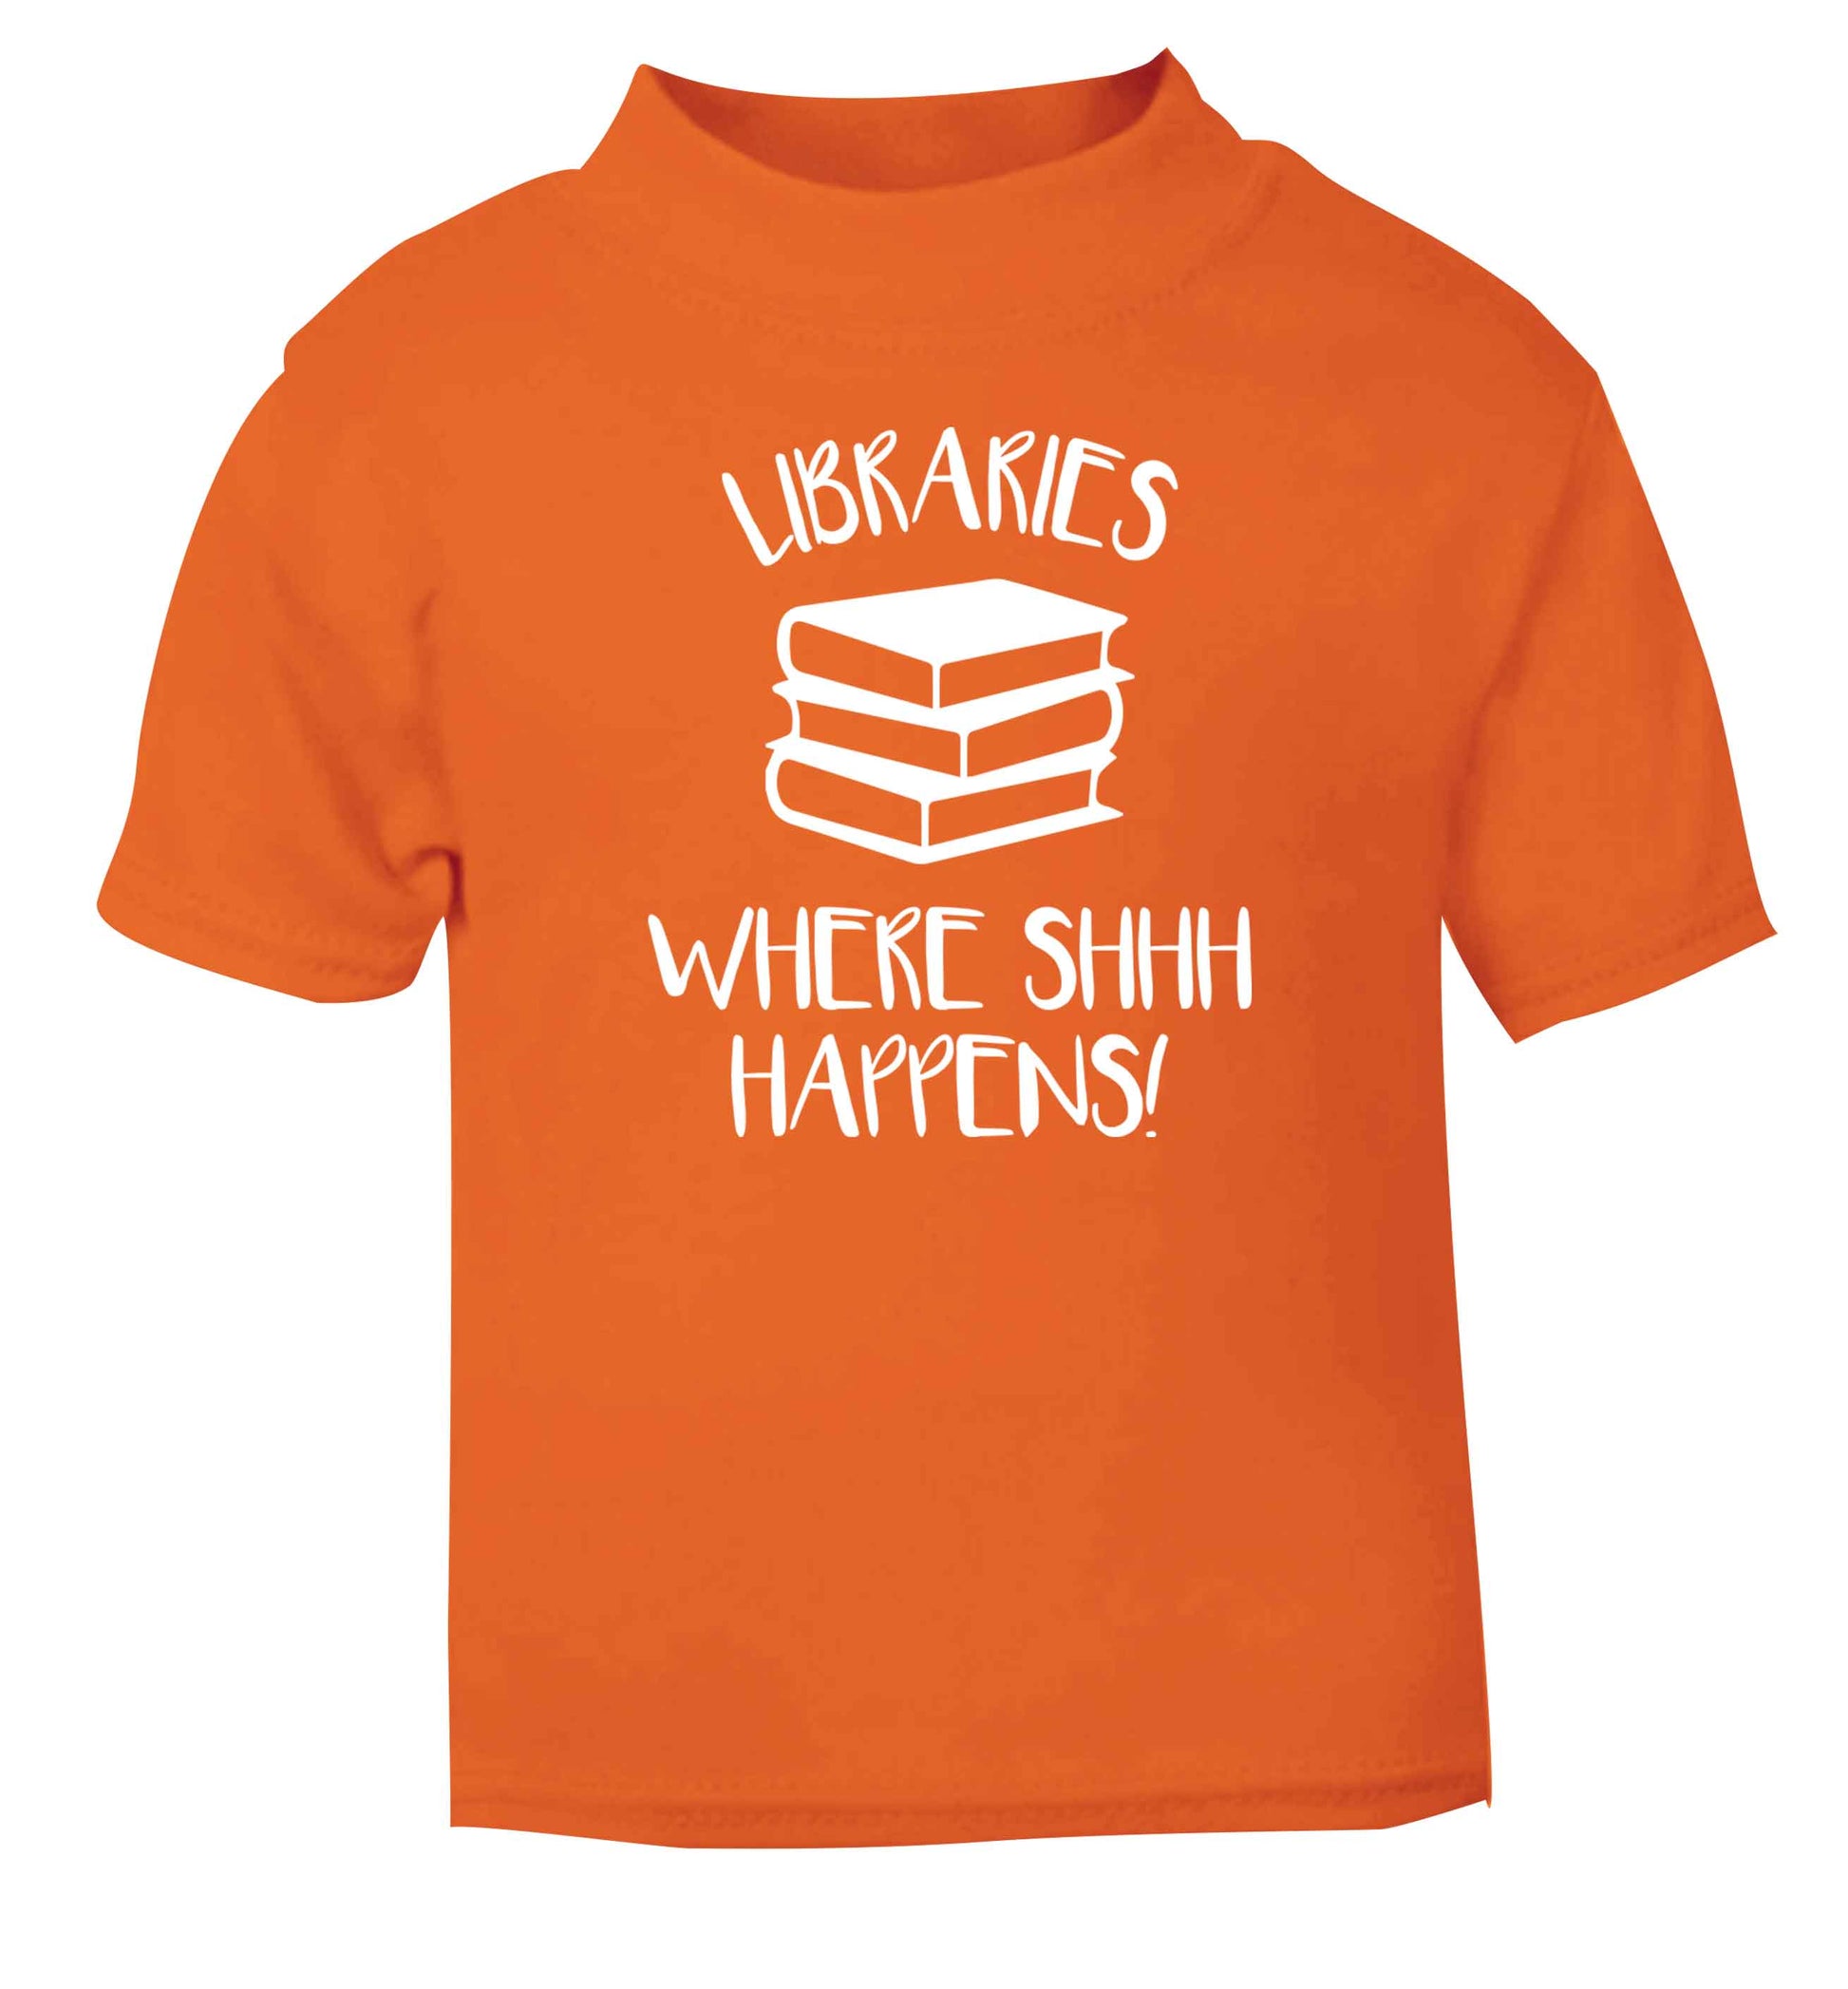 Libraries where shh happens! orange Baby Toddler Tshirt 2 Years